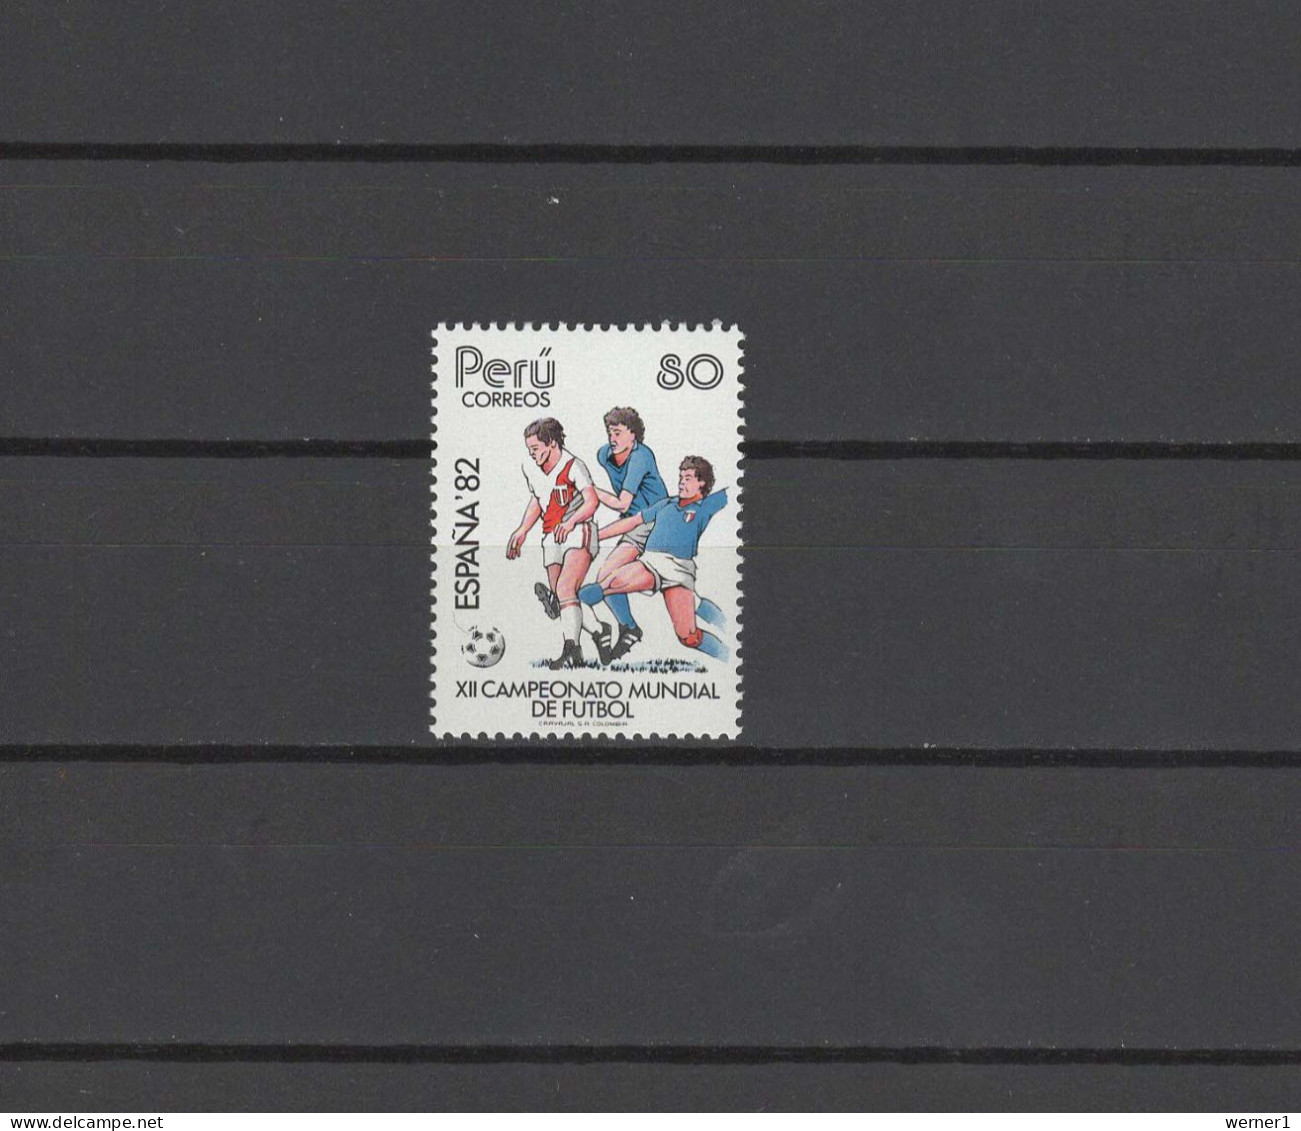 Peru 1982 Football Soccer World Cup Stamp MNH - 1982 – Spain